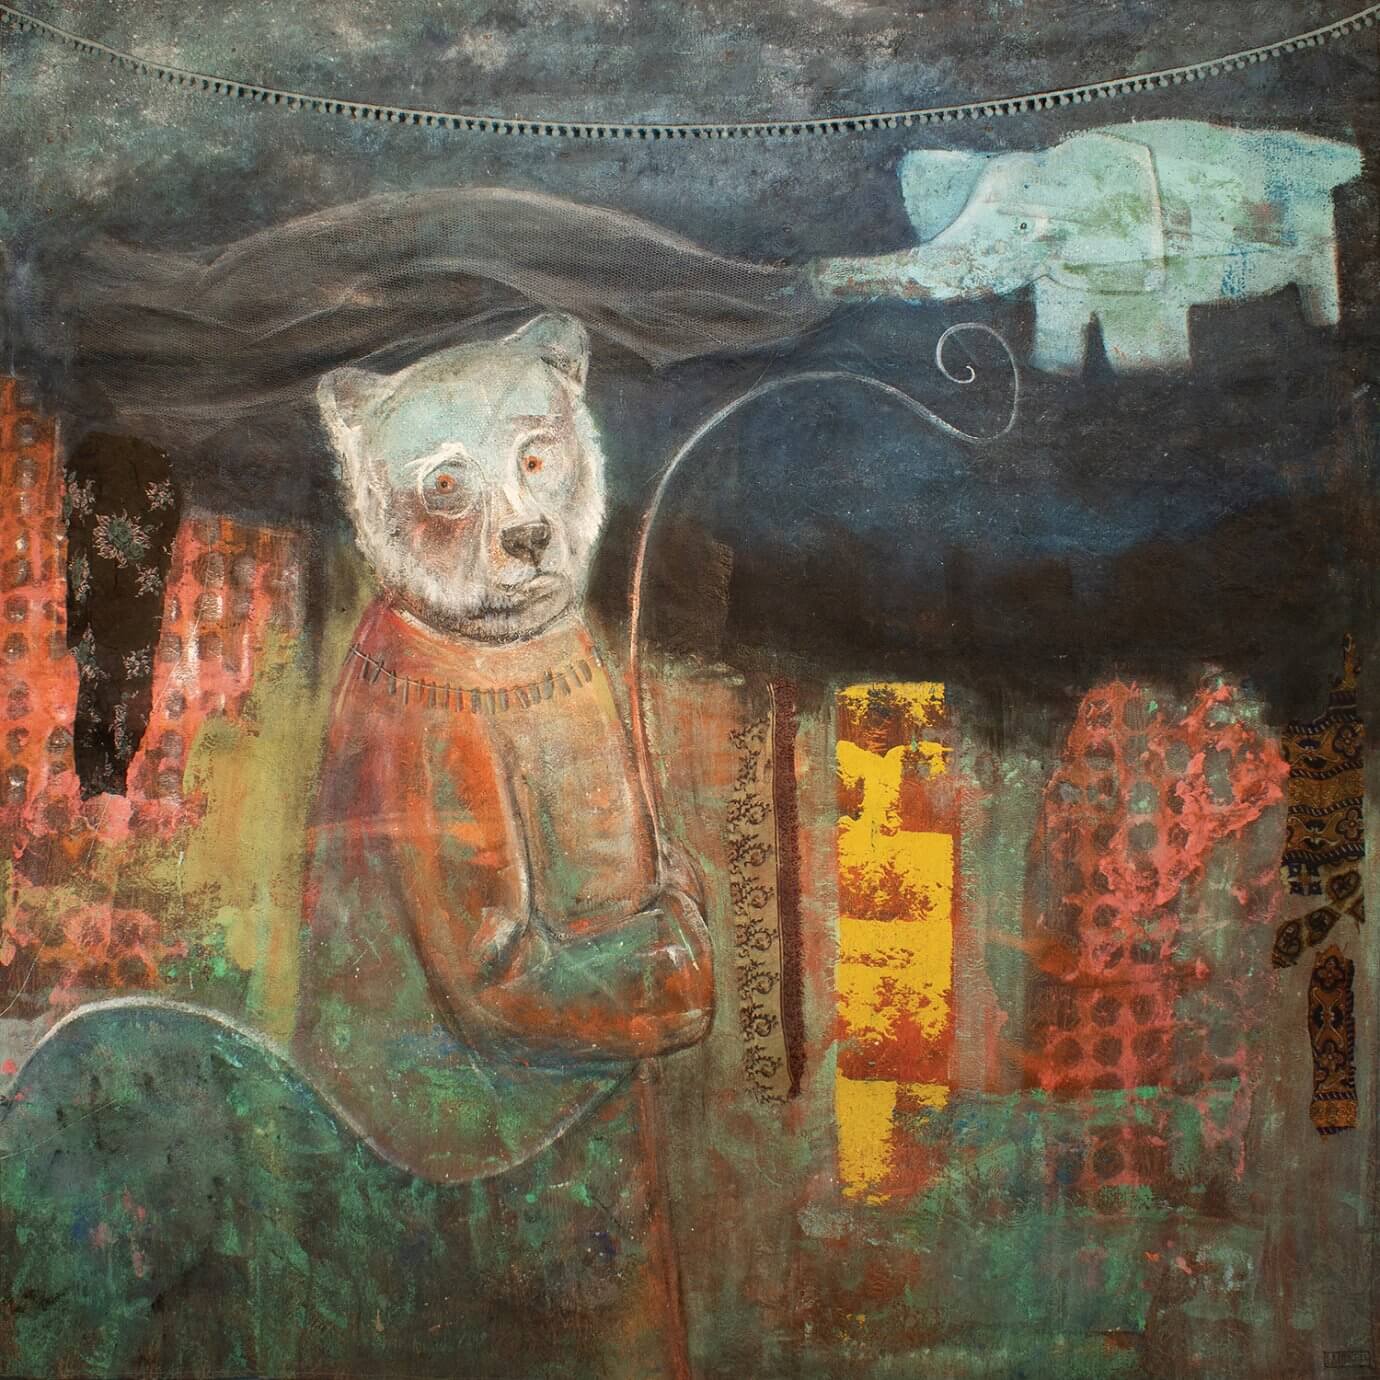 linda mitchell painting - bear and elephant